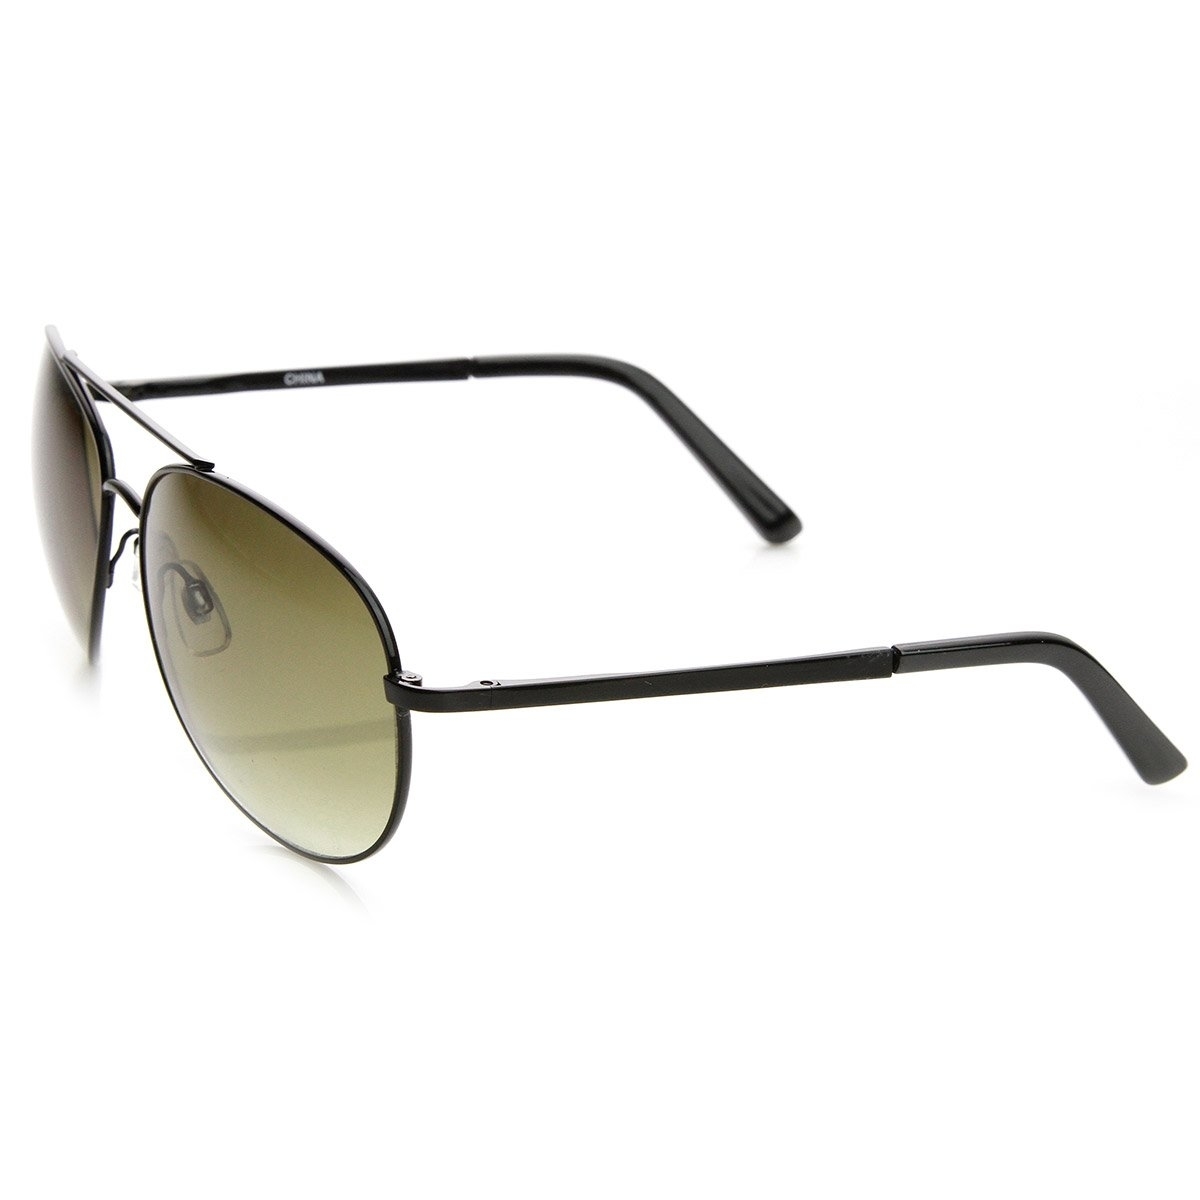 Unisex Round Metal Tear Drop Aviator Sunglasses - Gold